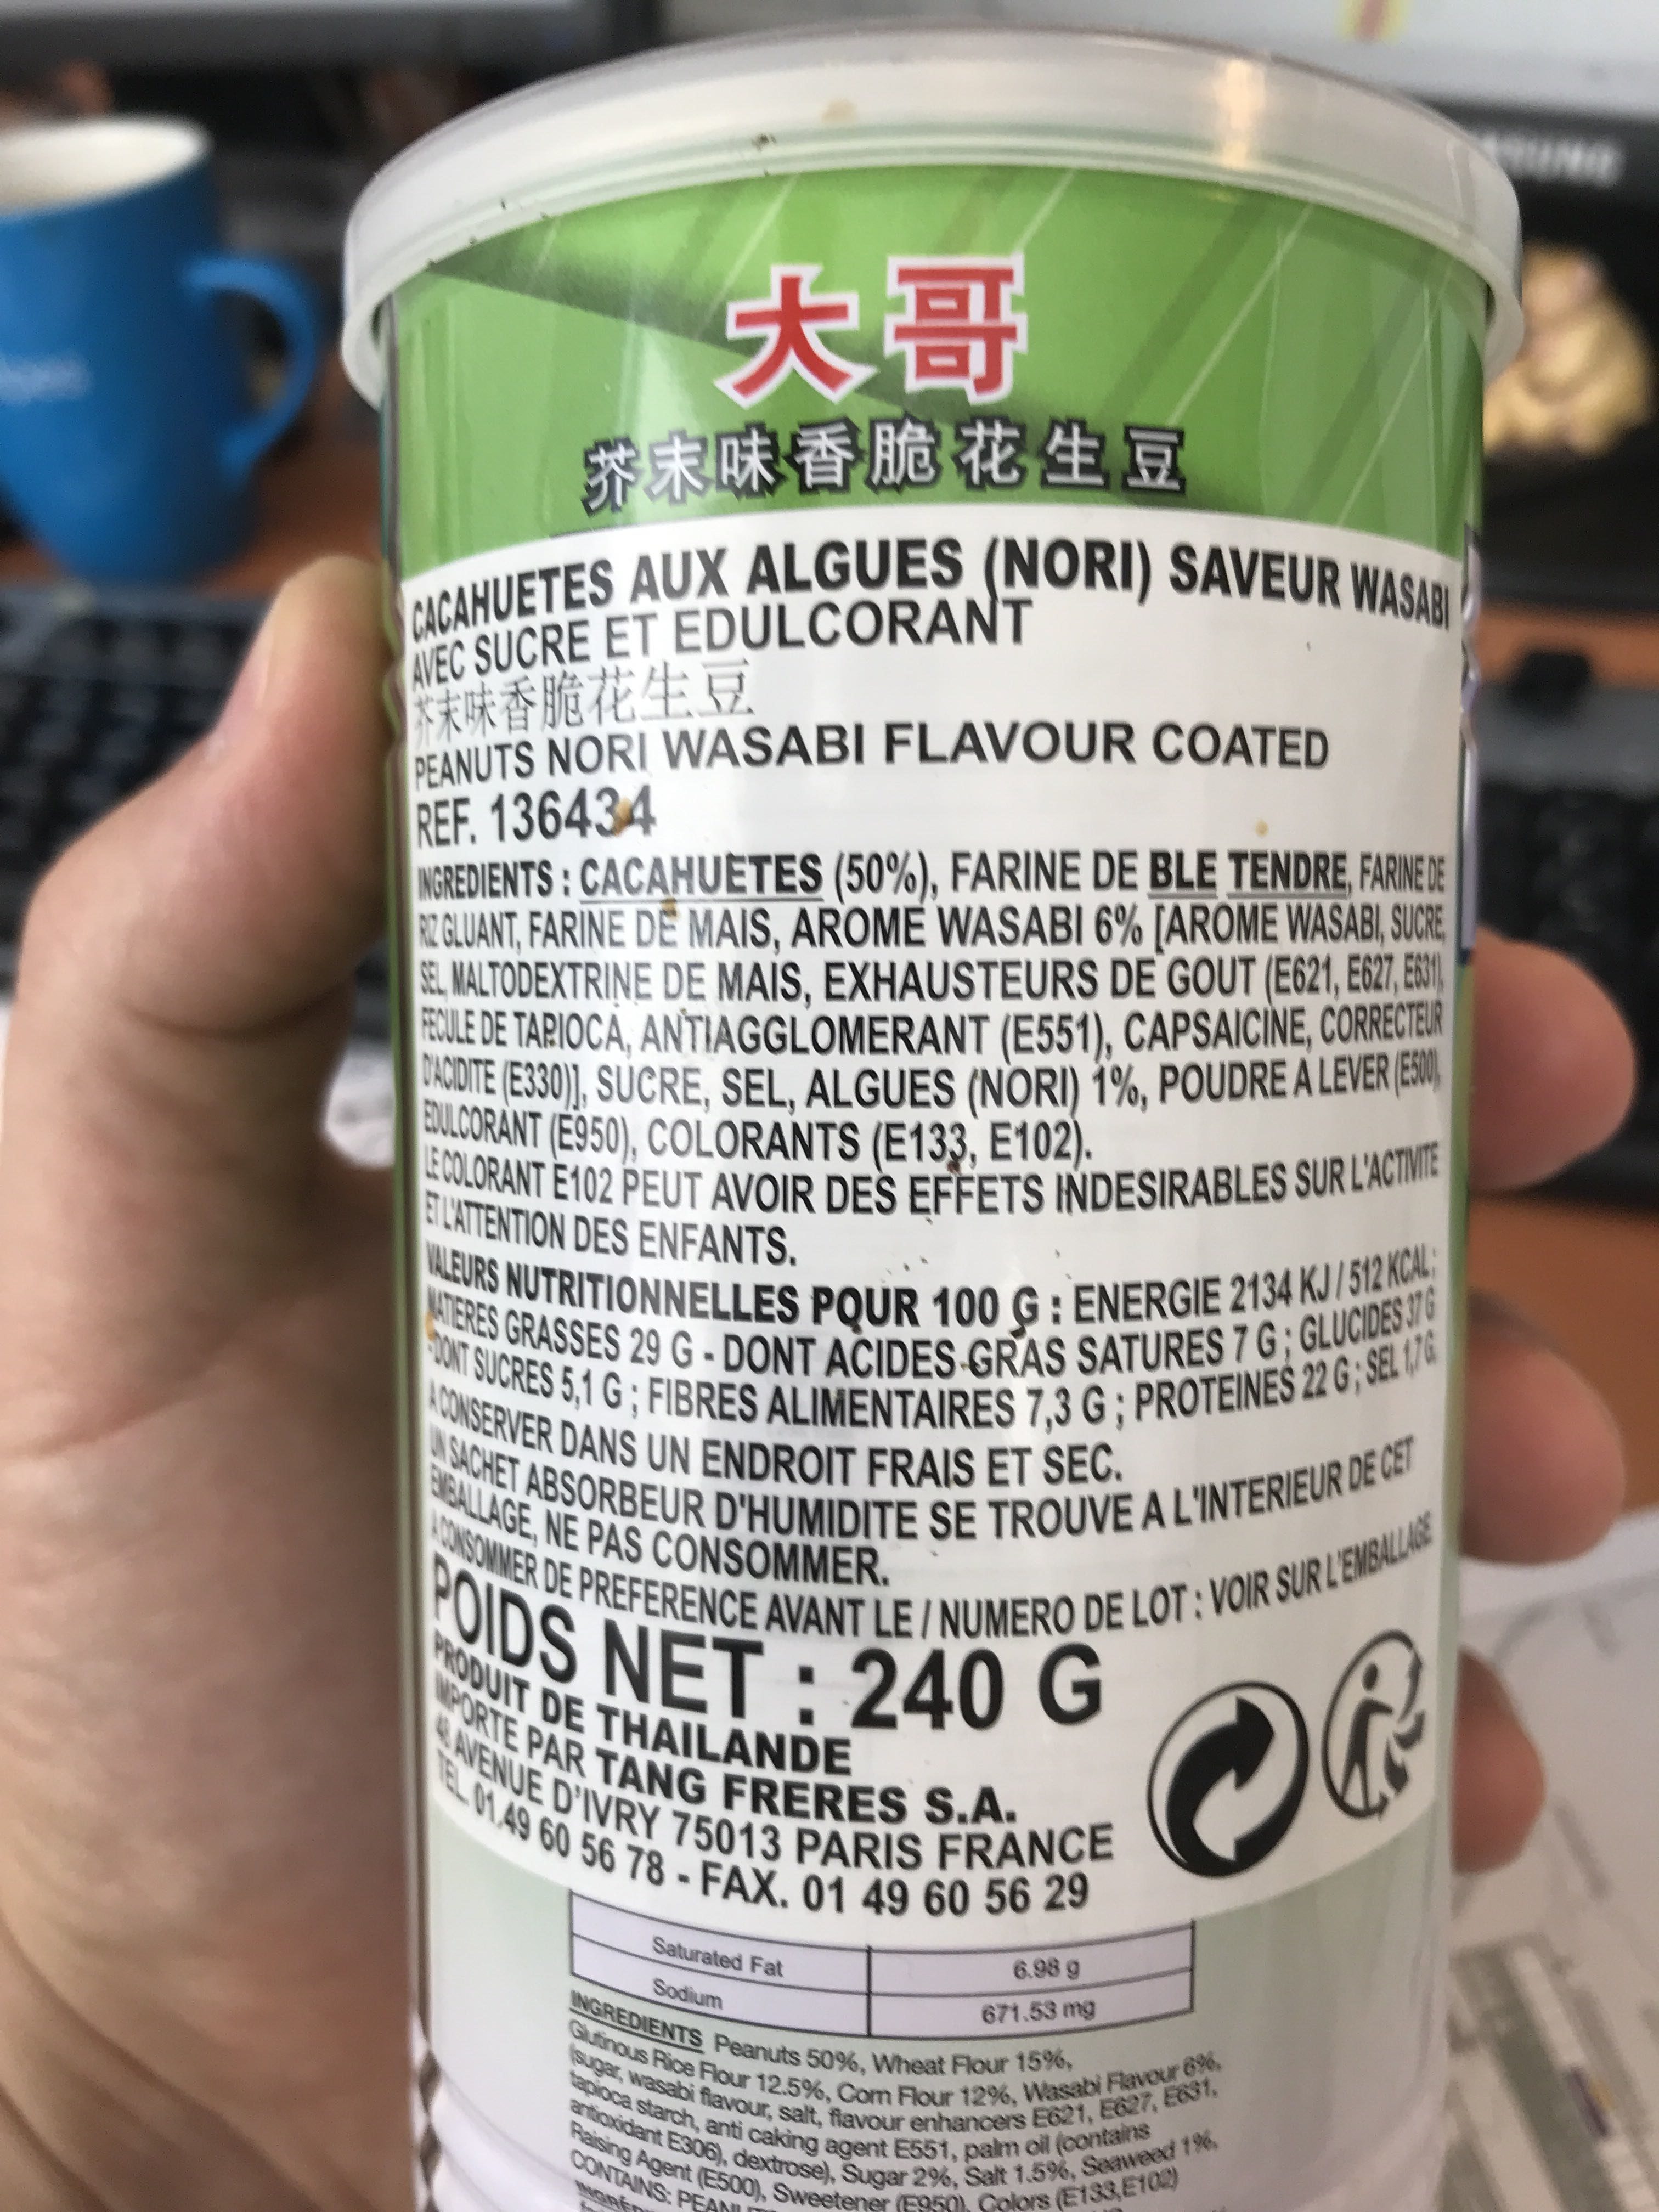 Peanuts nori wasabi coated - Producto - fr